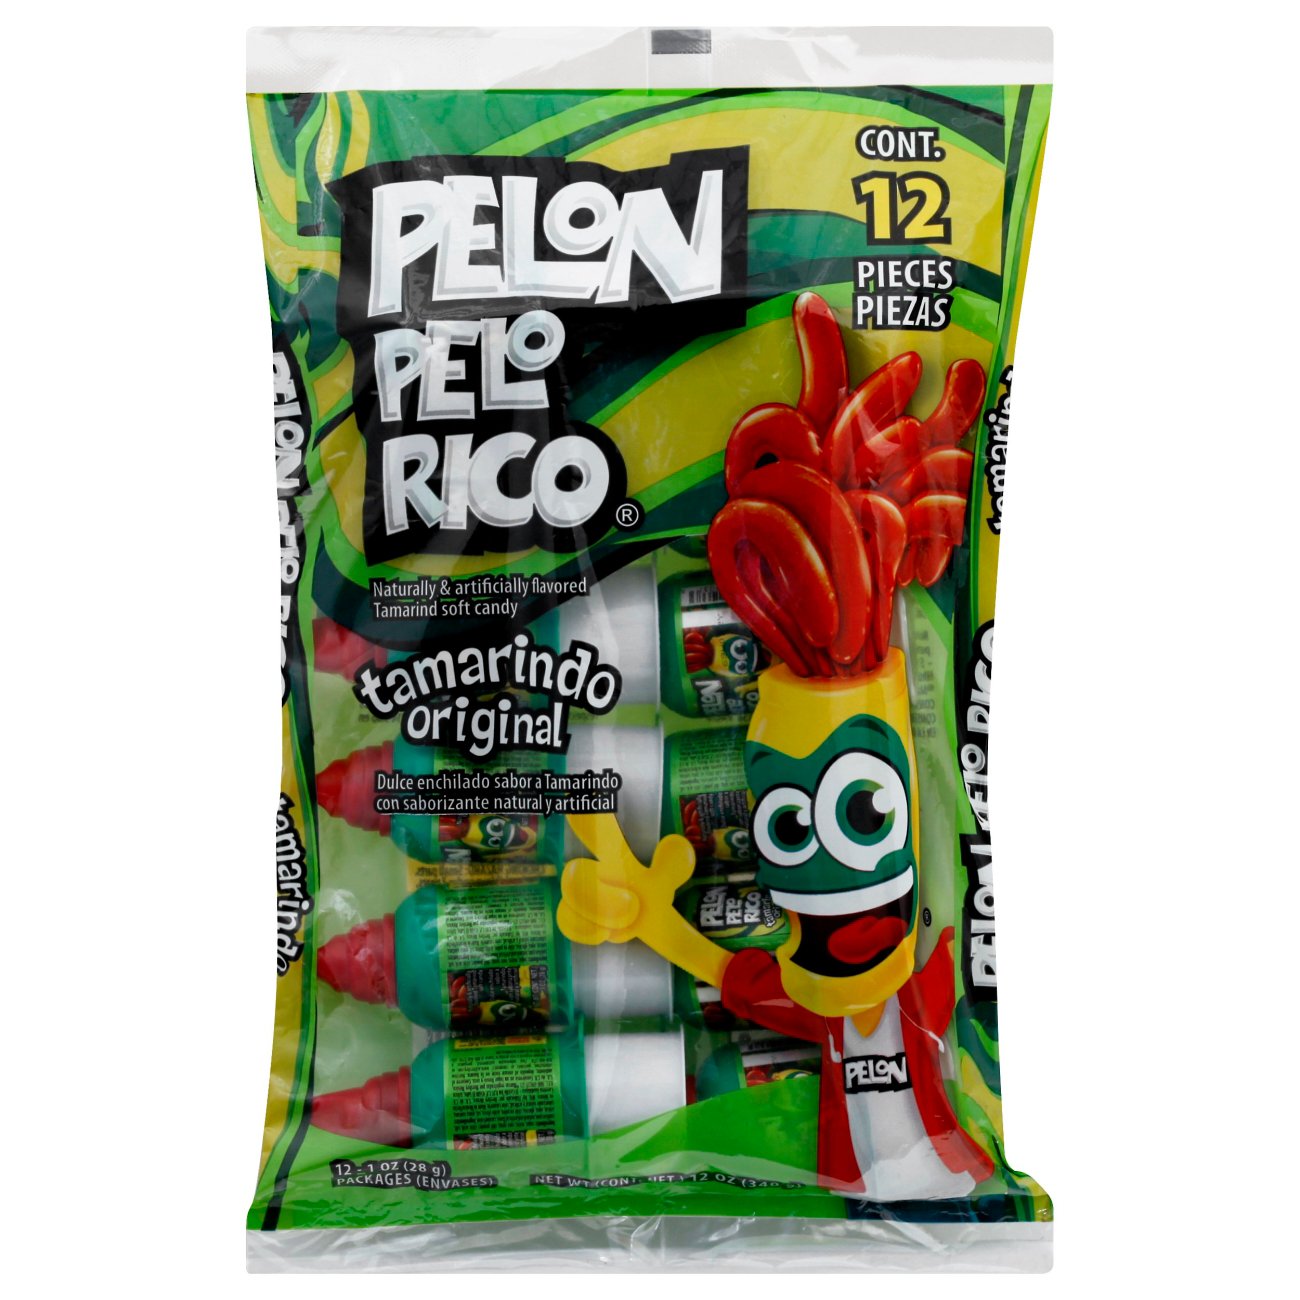 Lorena Pelon Pelo Rico - Shop Candy at H-E-B